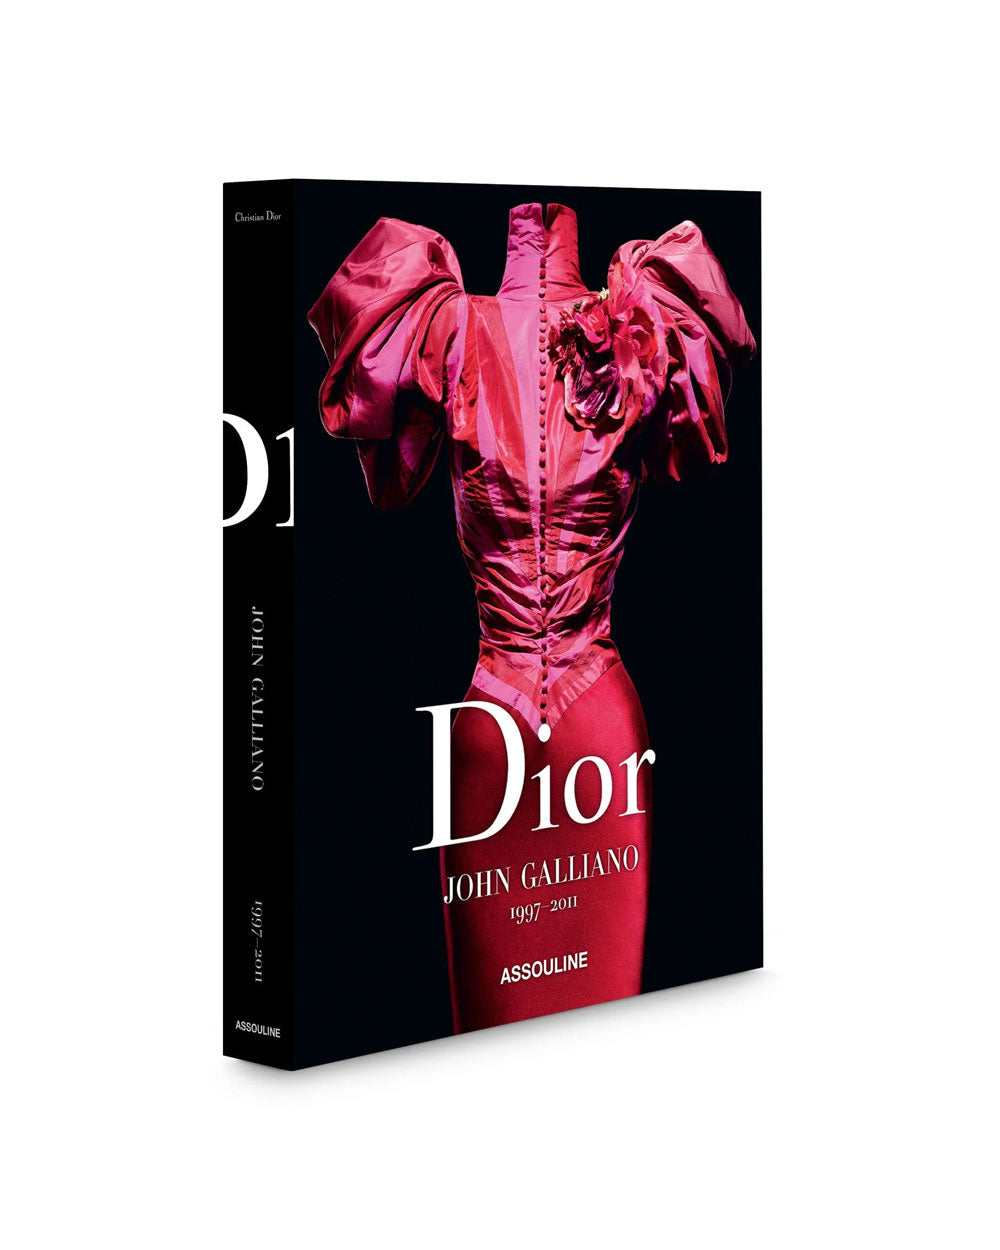 Dior by John Galliano